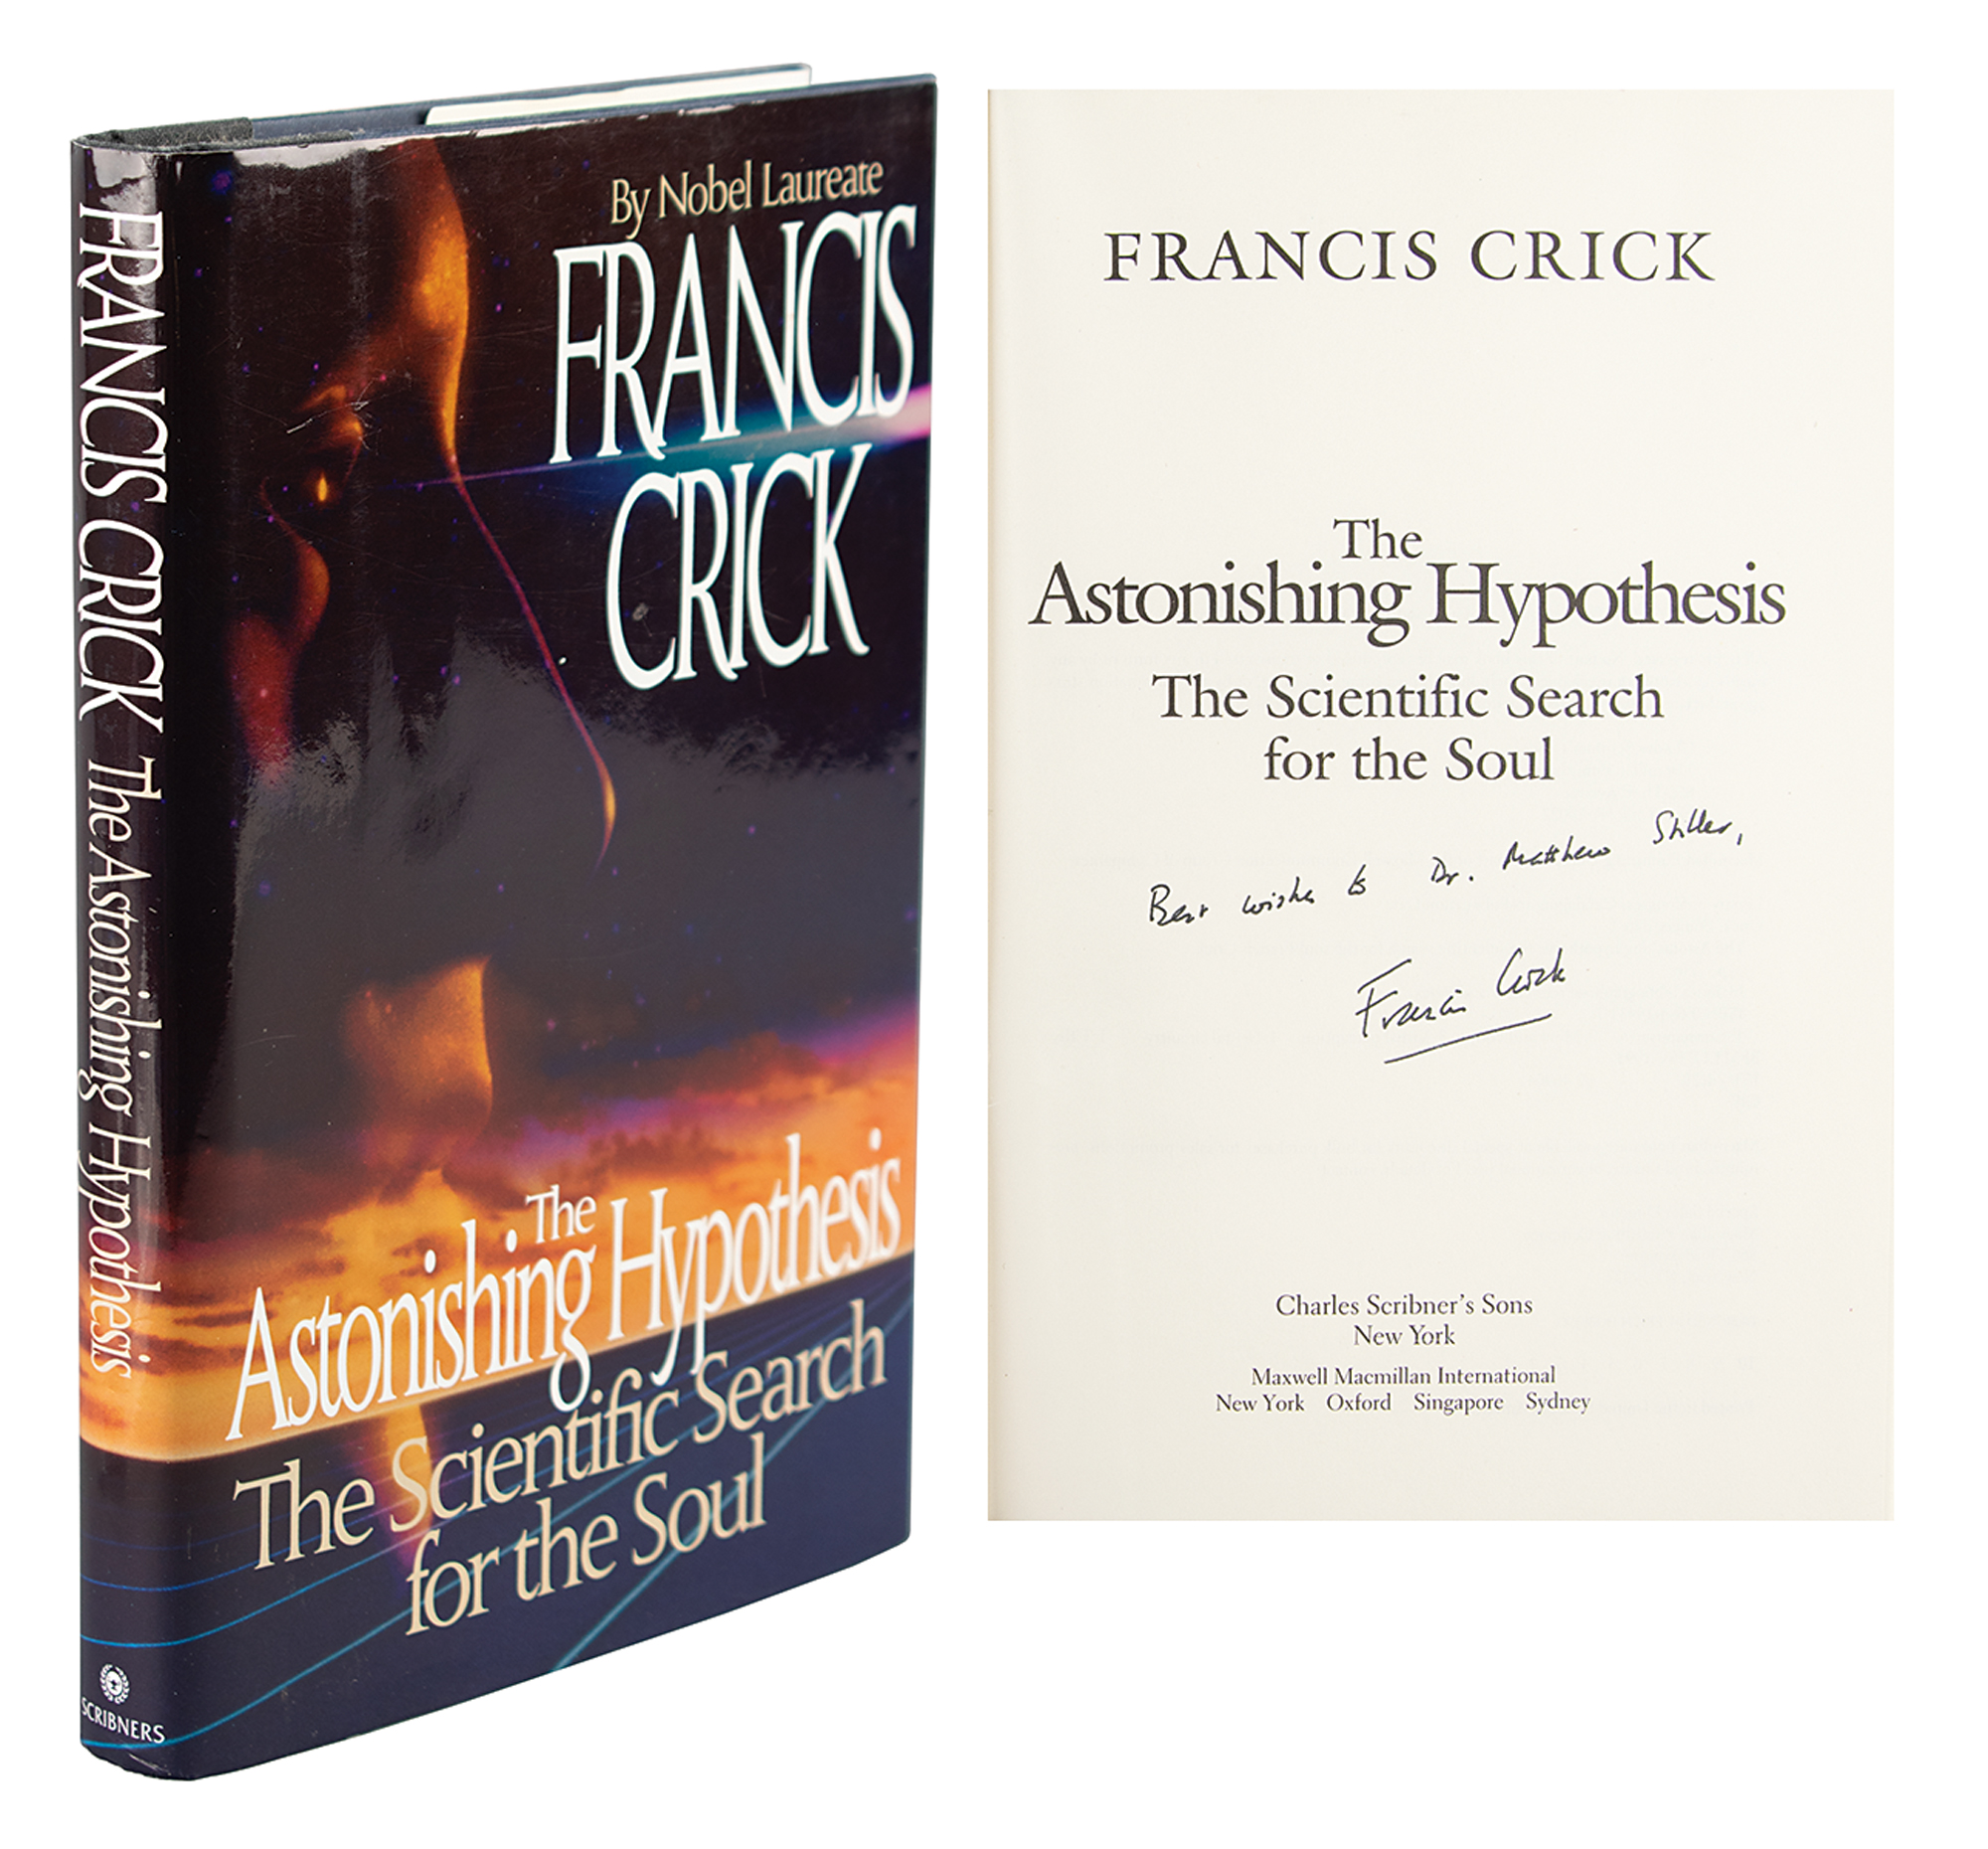 Lot #167 DNA: Francis Crick Signed Book